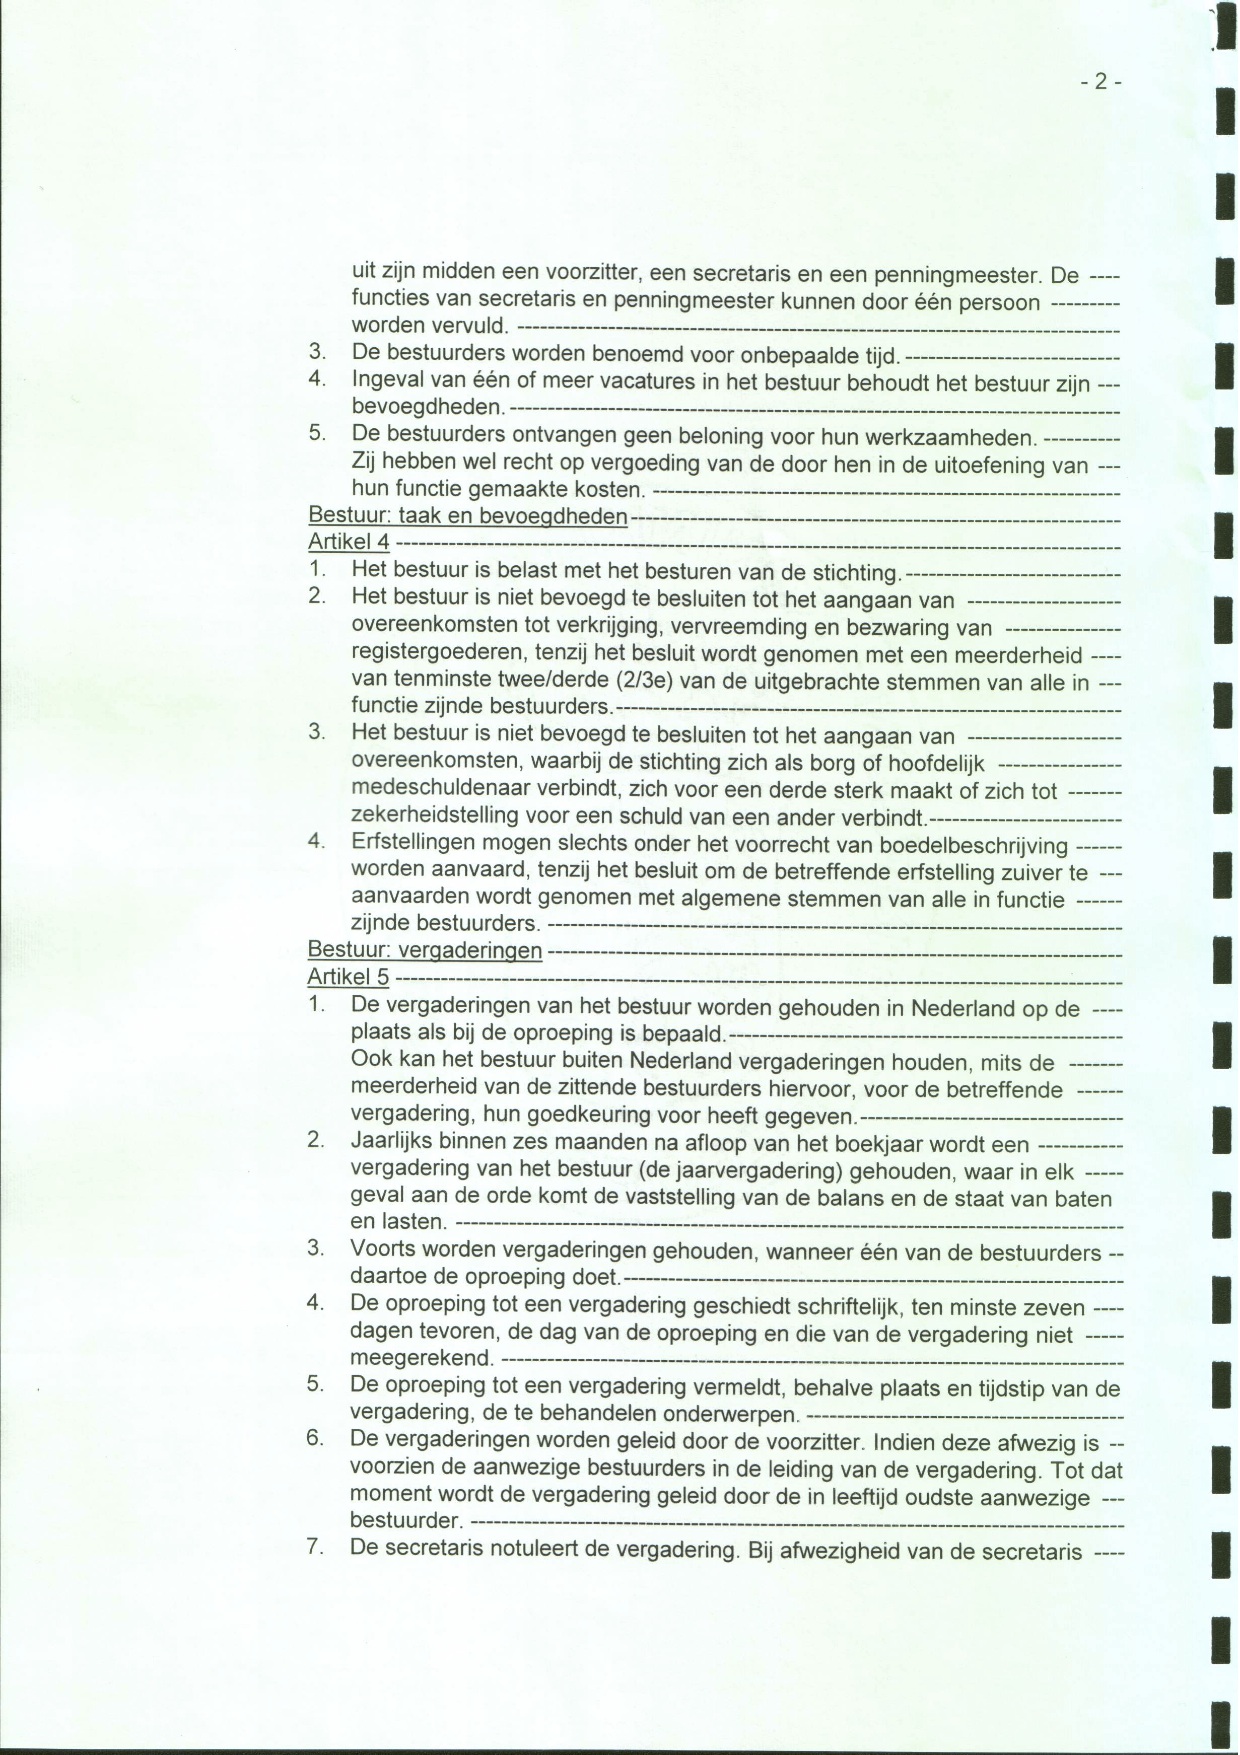 Statuten 15 apr 2010 pagina 2.jpg